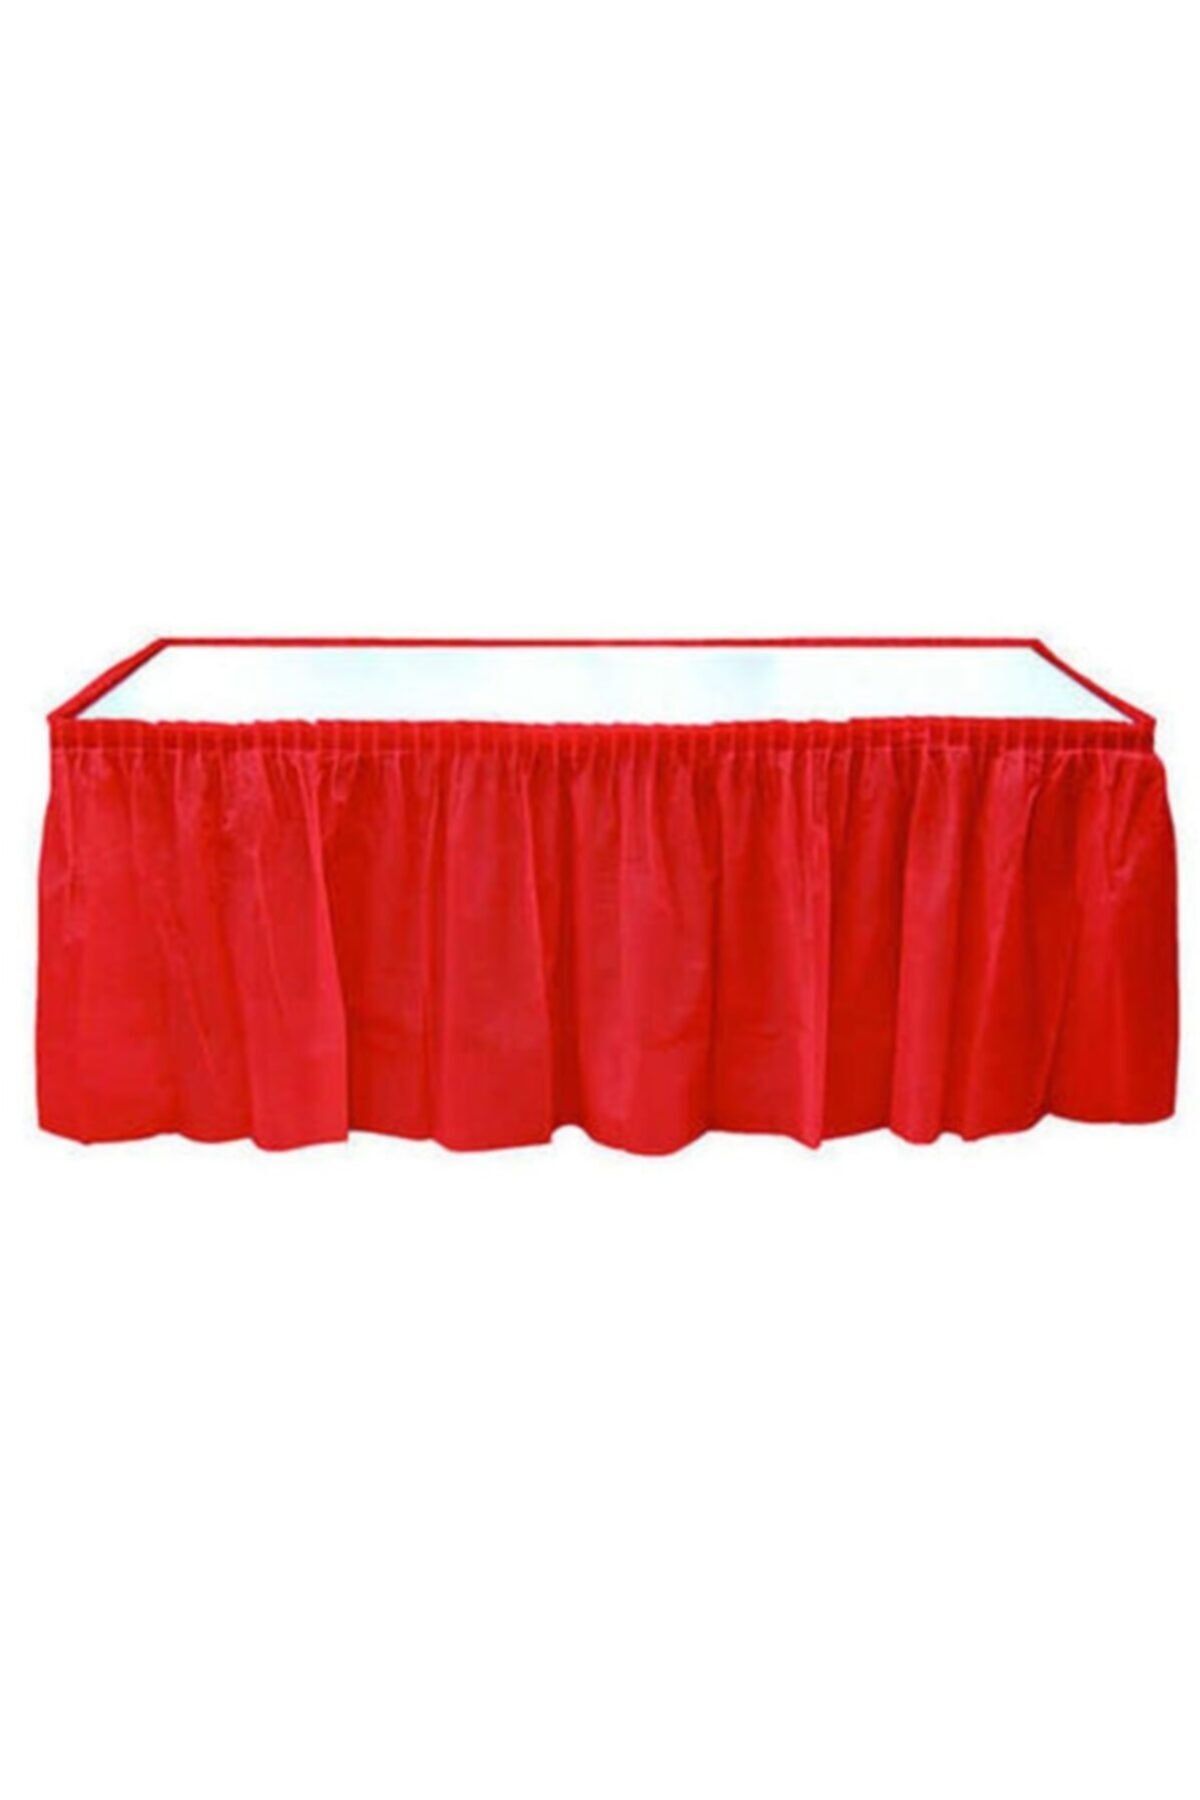 Roll Up Kırmızı Plastik Masa Eteği 75 X 4,26 cm